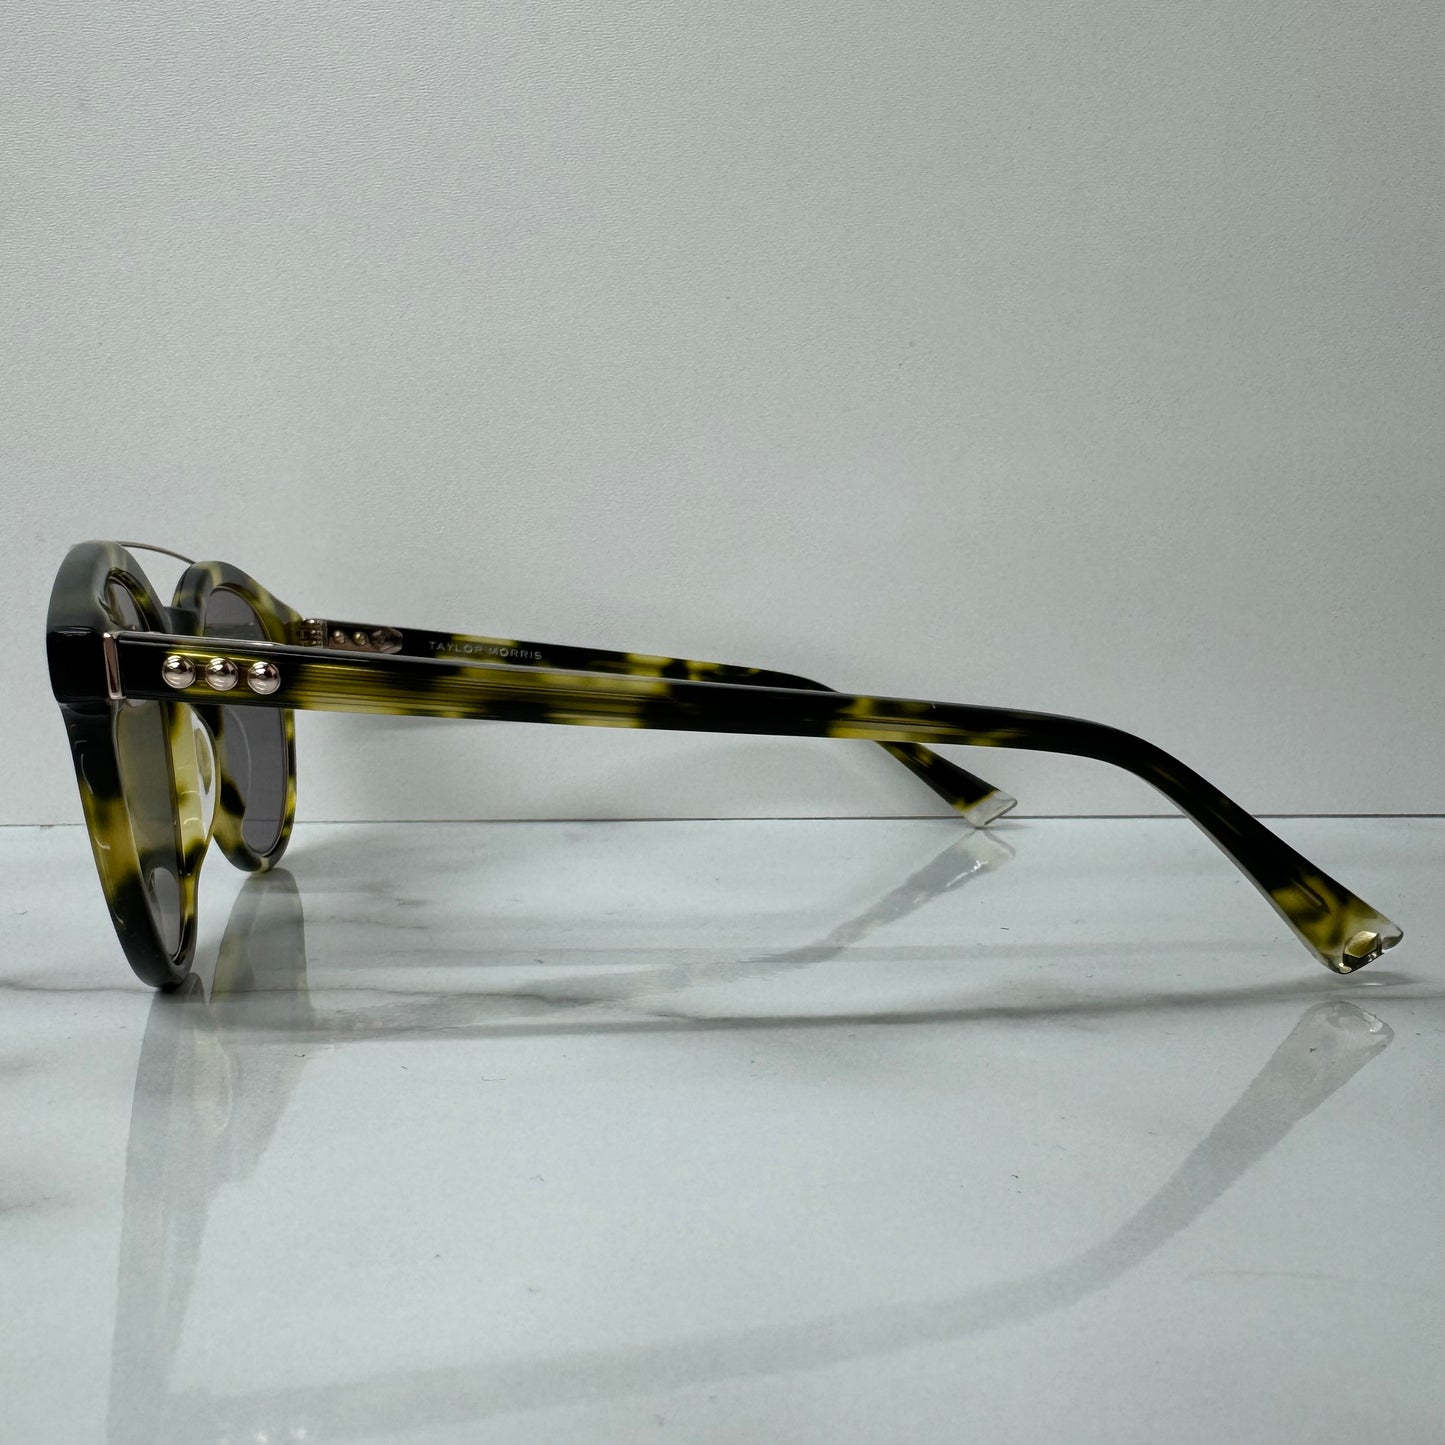 Taylor Morris Blenheim Yellow & Black Sunglasses - 32071 C4